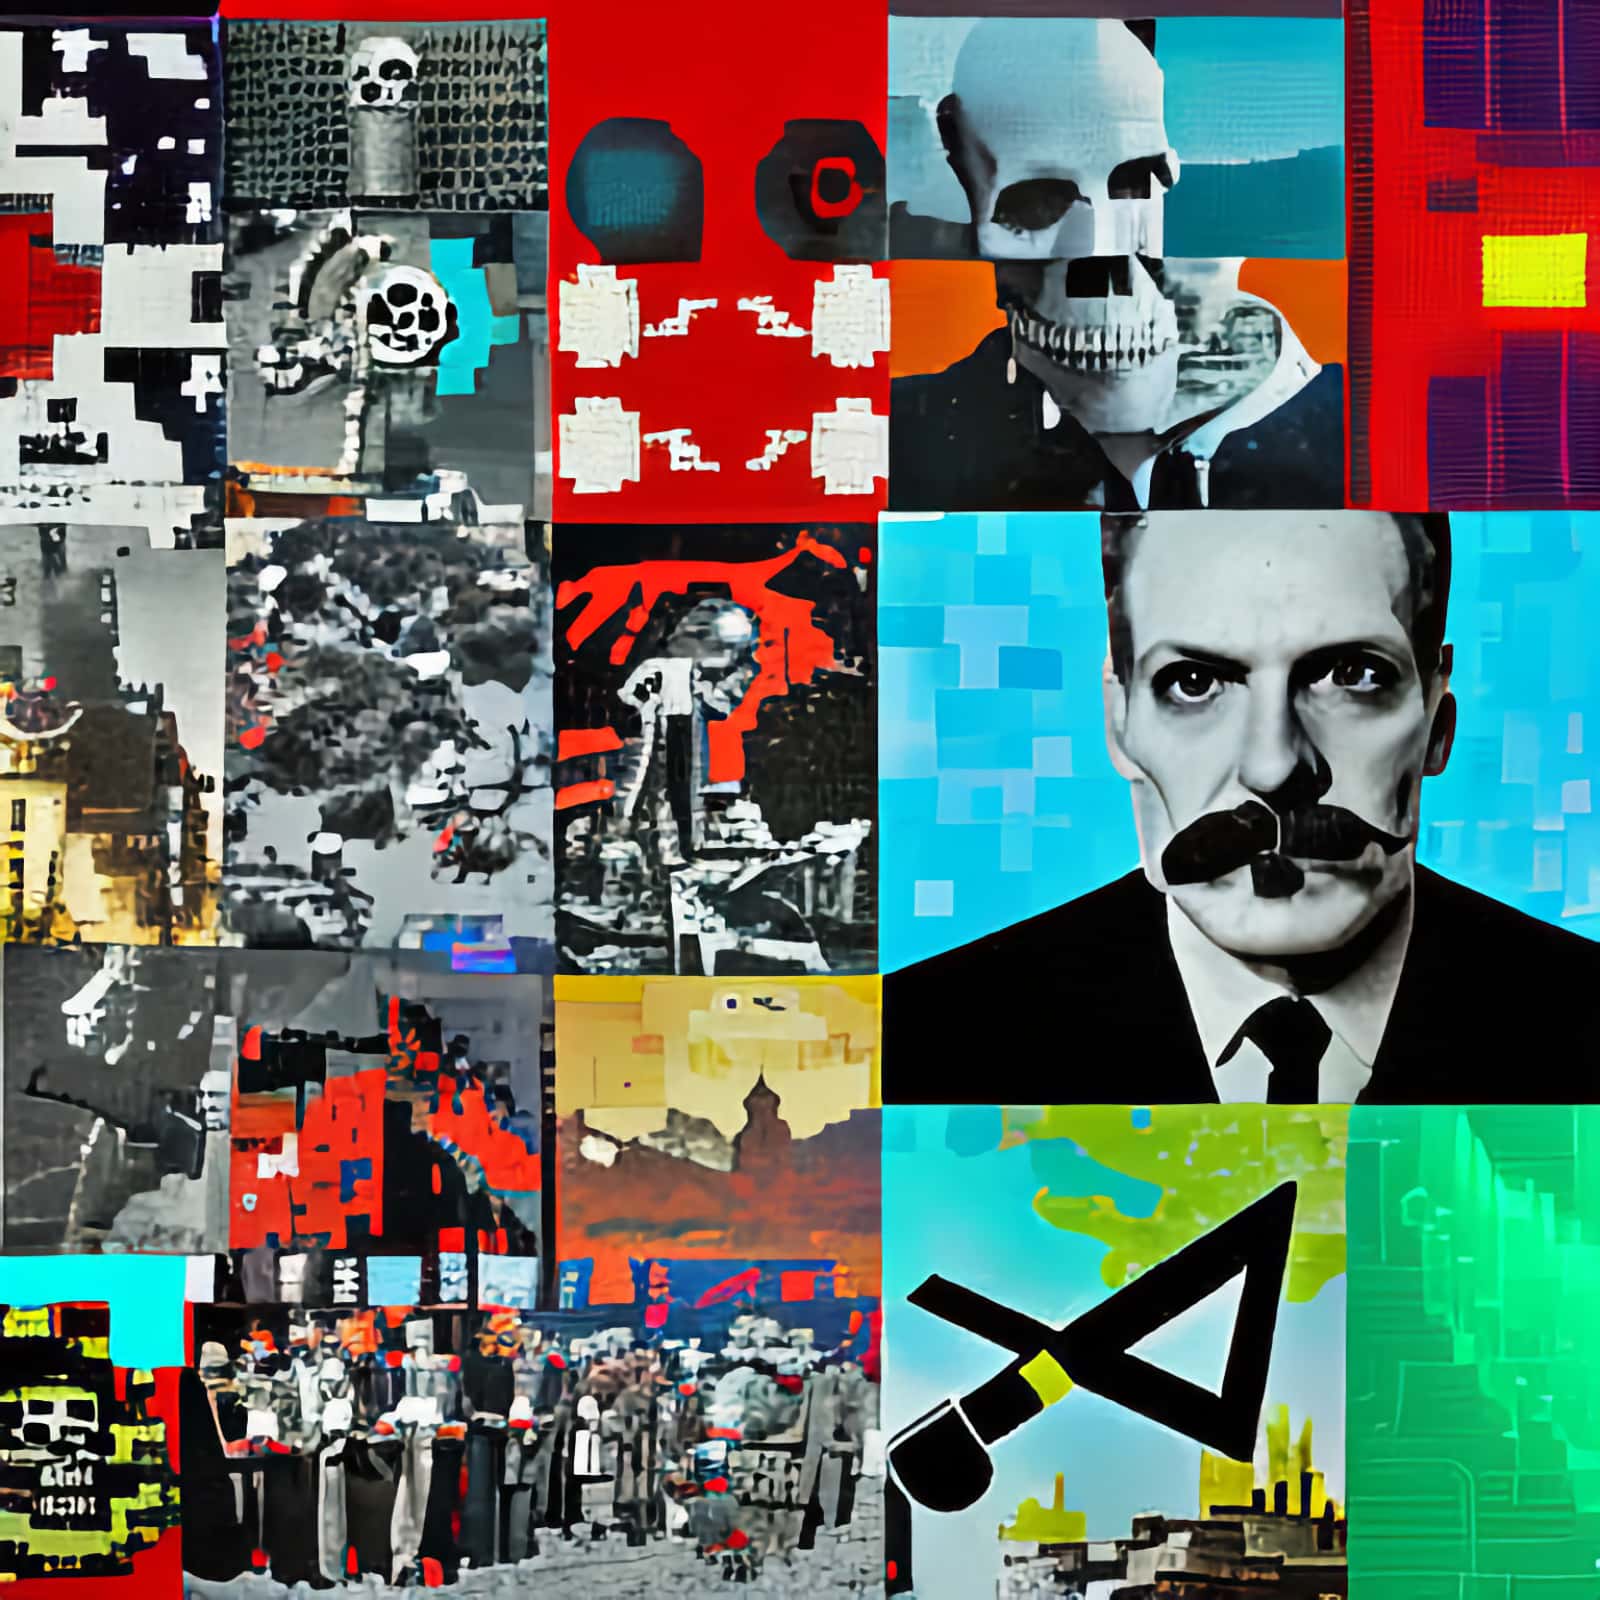 Masonic, Radio Clash collage - Ghost In The Machine series, AI